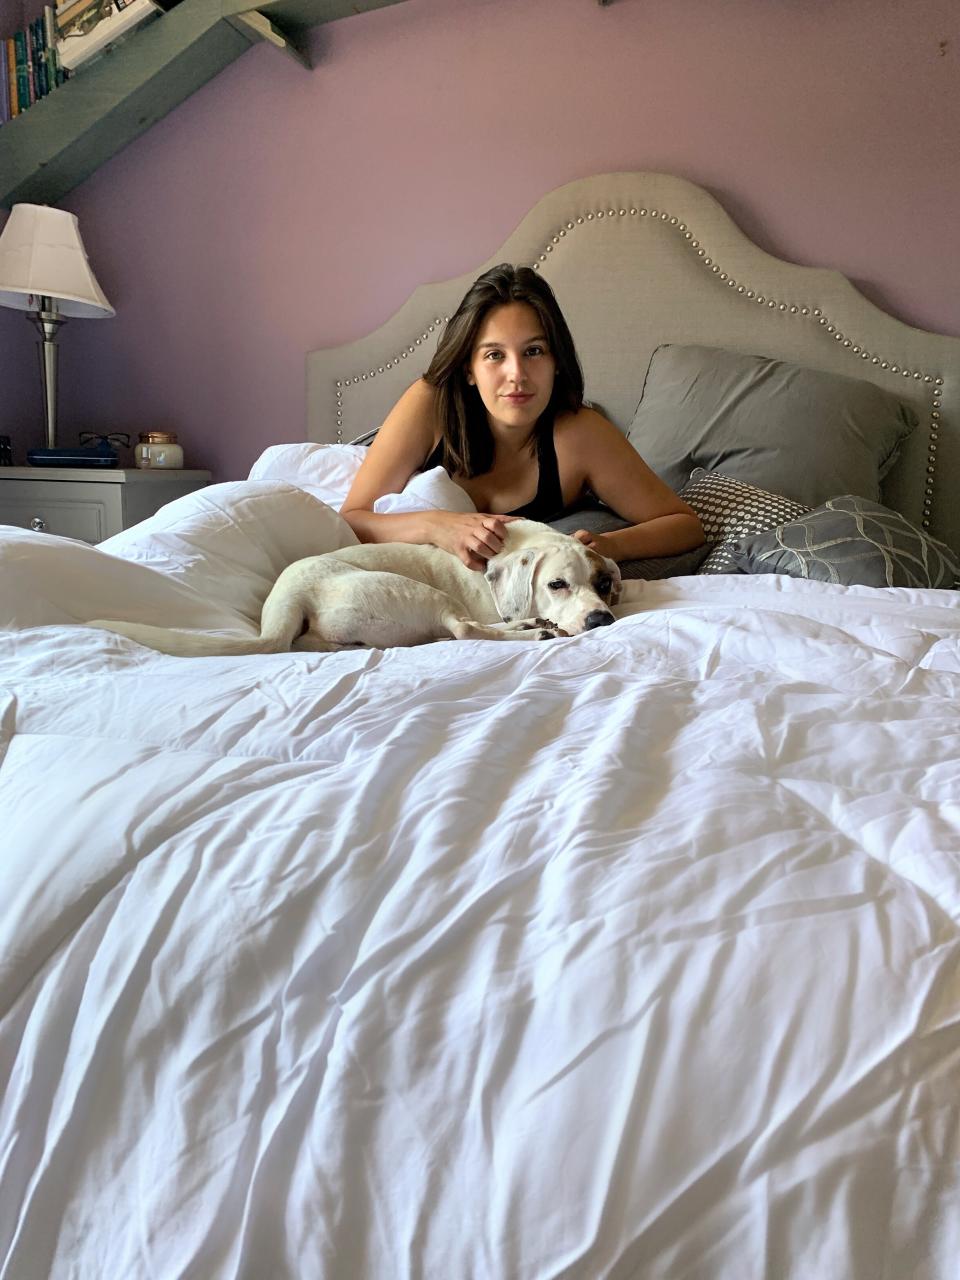 Writer Danielle Gonzalez and her pup, April, enjoying the Buffy Cloud Comforter. (Photo: <a href="https://www.instagram.com/wesleygonz_/" target="_blank">Wesley Gonzalez</a>)